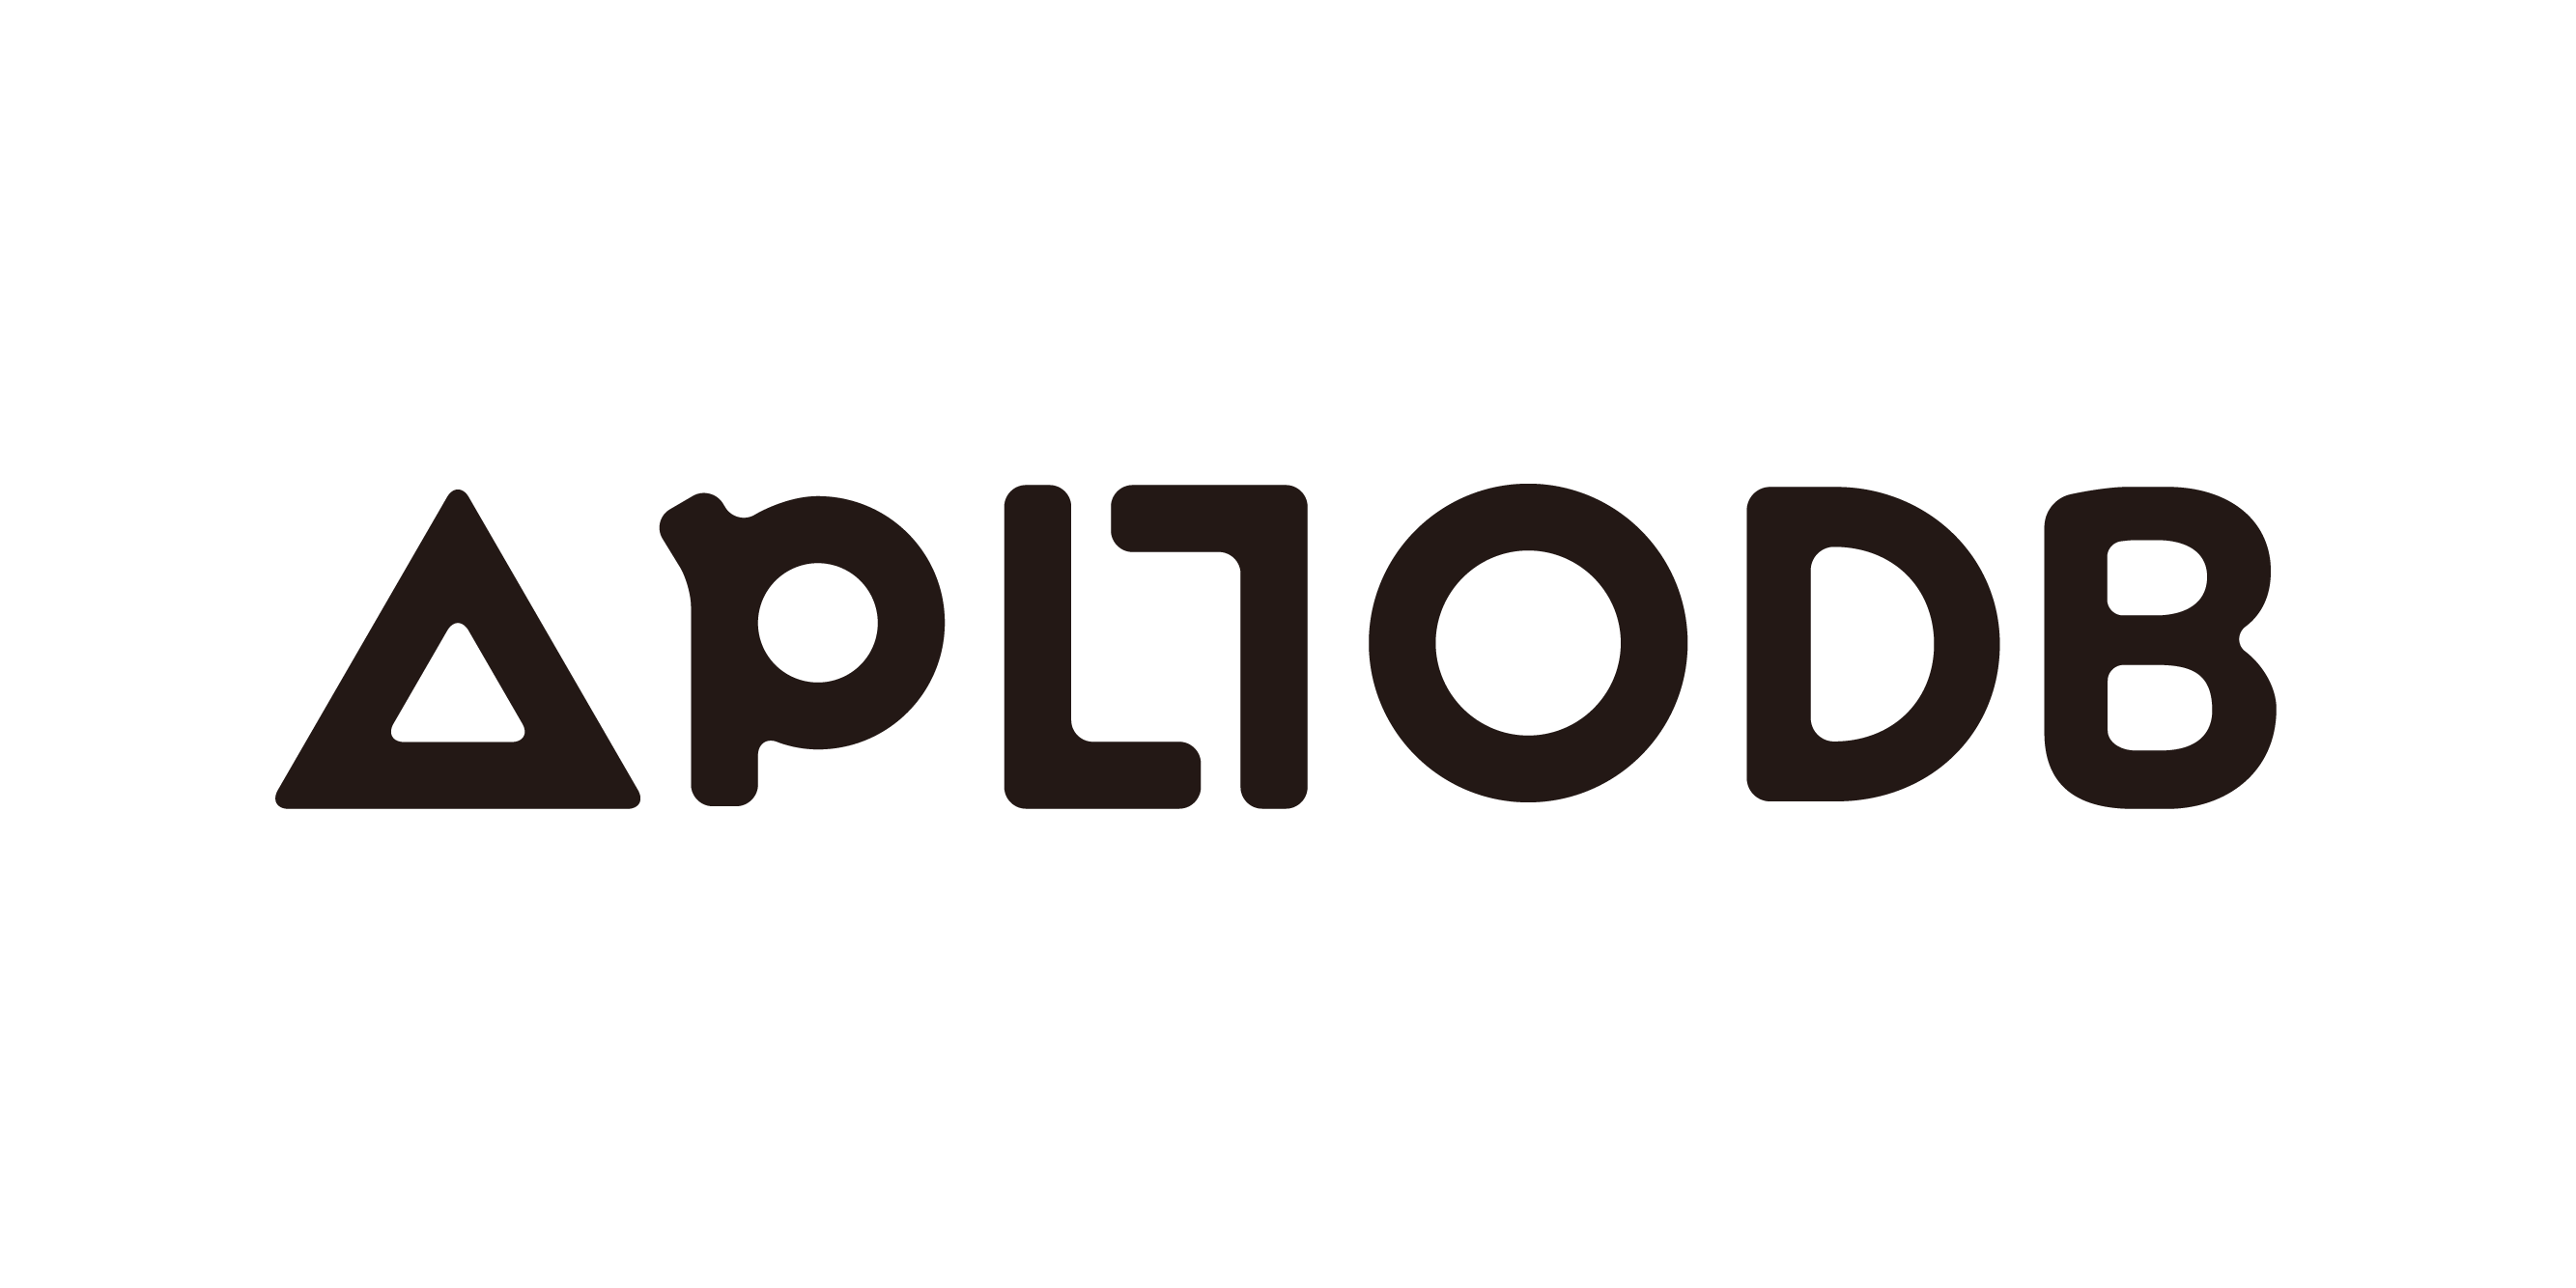 apllodb logo